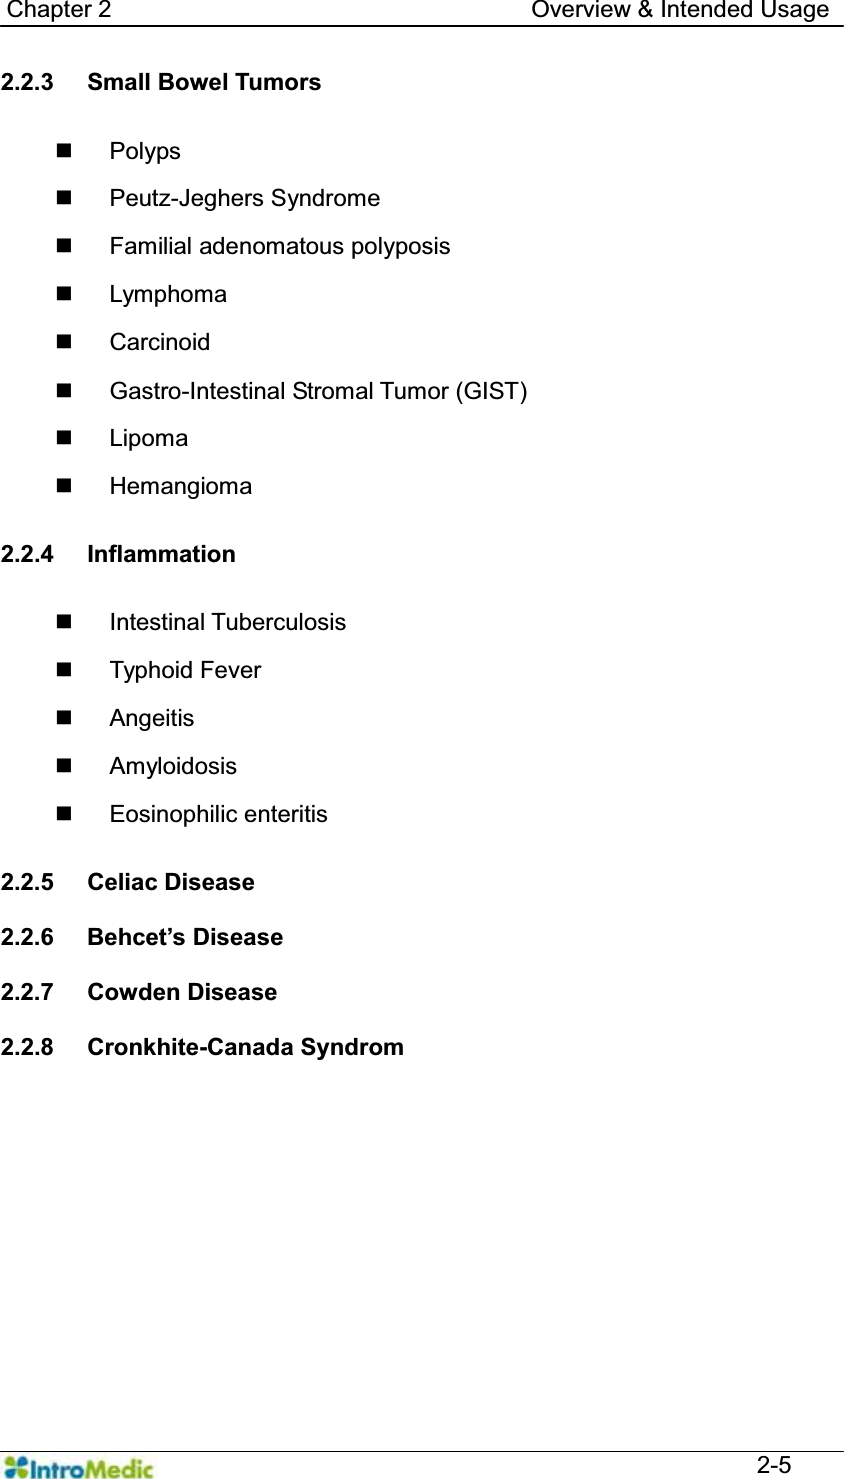   Chapter 2                                   Overview &amp; Intended Usage  2-5 2.2.3 Small Bowel Tumors    Polyps  Peutz-Jeghers Syndrome  Familial adenomatous polyposis  Lymphoma  Carcinoid   Gastro-Intestinal Stromal Tumor (GIST)  Lipoma  Hemangioma  2.2.4 Inflammation   Intestinal Tuberculosis  Typhoid Fever  Angeitis  Amyloidosis  Eosinophilic enteritis  2.2.5 Celiac Disease  2.2.6  %HKFHW¶V&apos;LVHDVH  2.2.7 Cowden Disease  2.2.8 Cronkhite-Canada Syndrom    